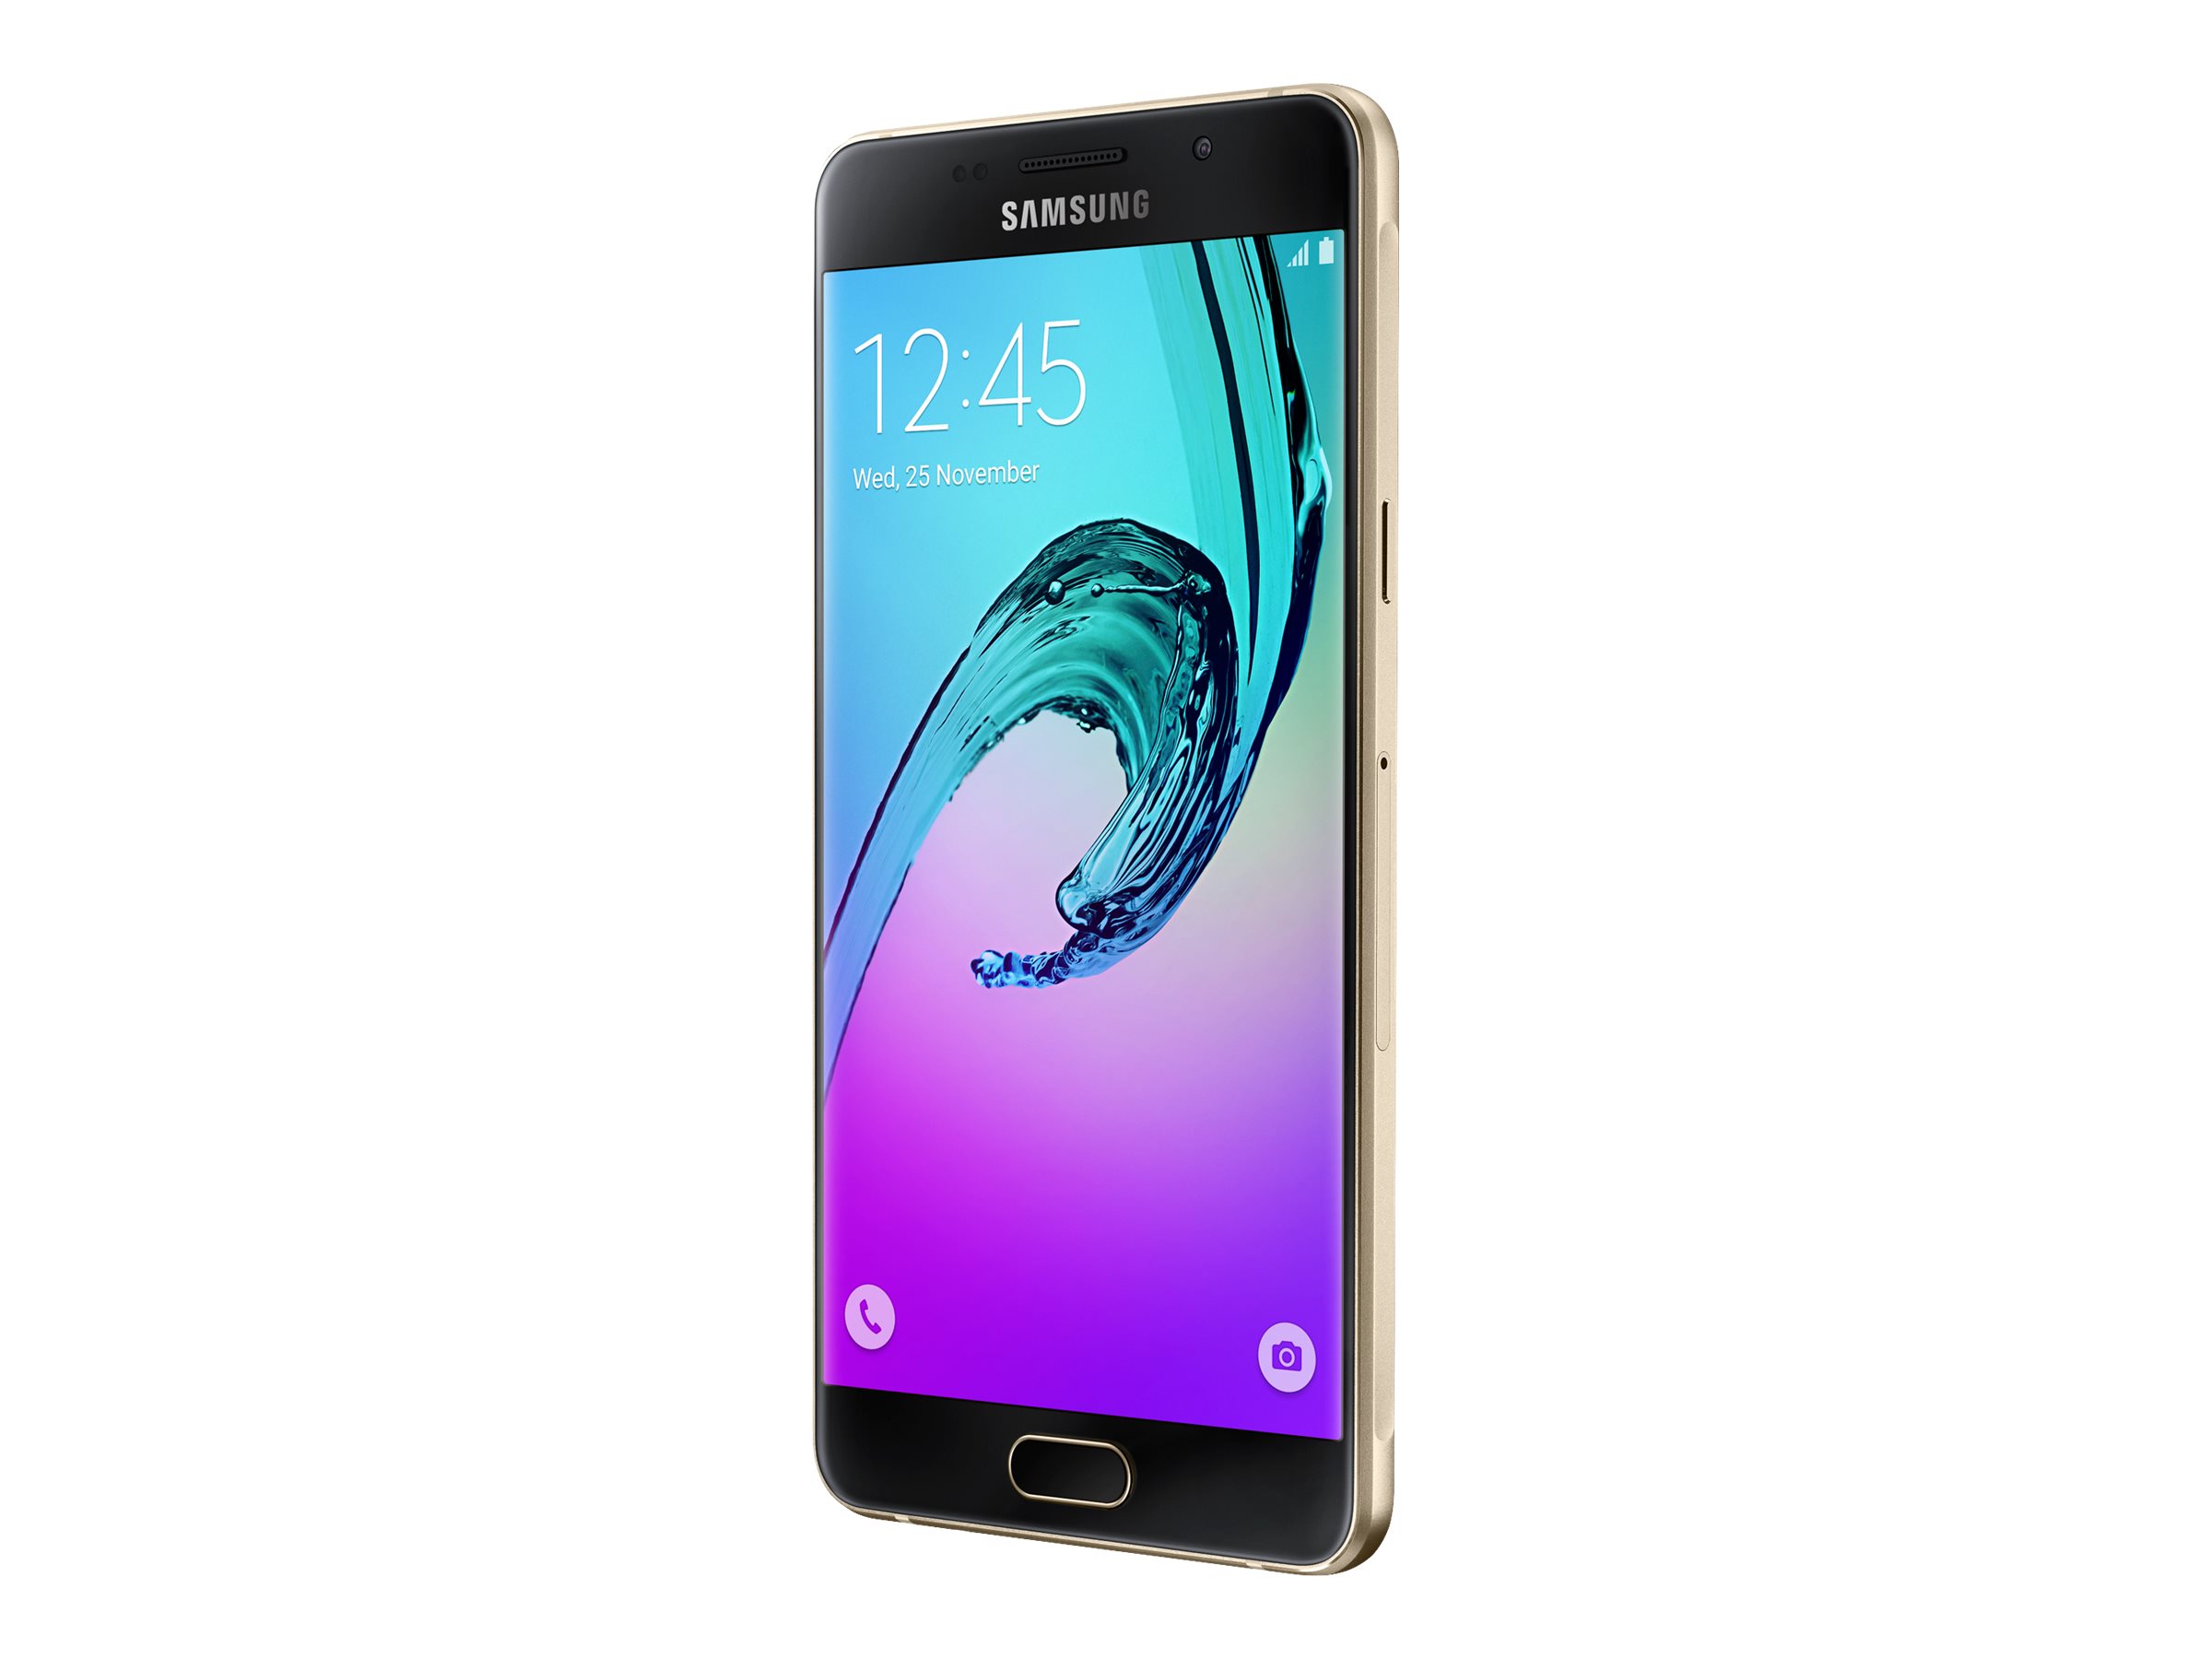 Samsung Galaxy A5 (2016) - 4G smartphone - dual-SIM - RAM 2 GB / Internal Memory 16 GB - microSD slot - OLED display - 5.2" - 1920 x 1080 pixels - rear camera 13 MP - front camera 5 MP - gold - image 2 of 6